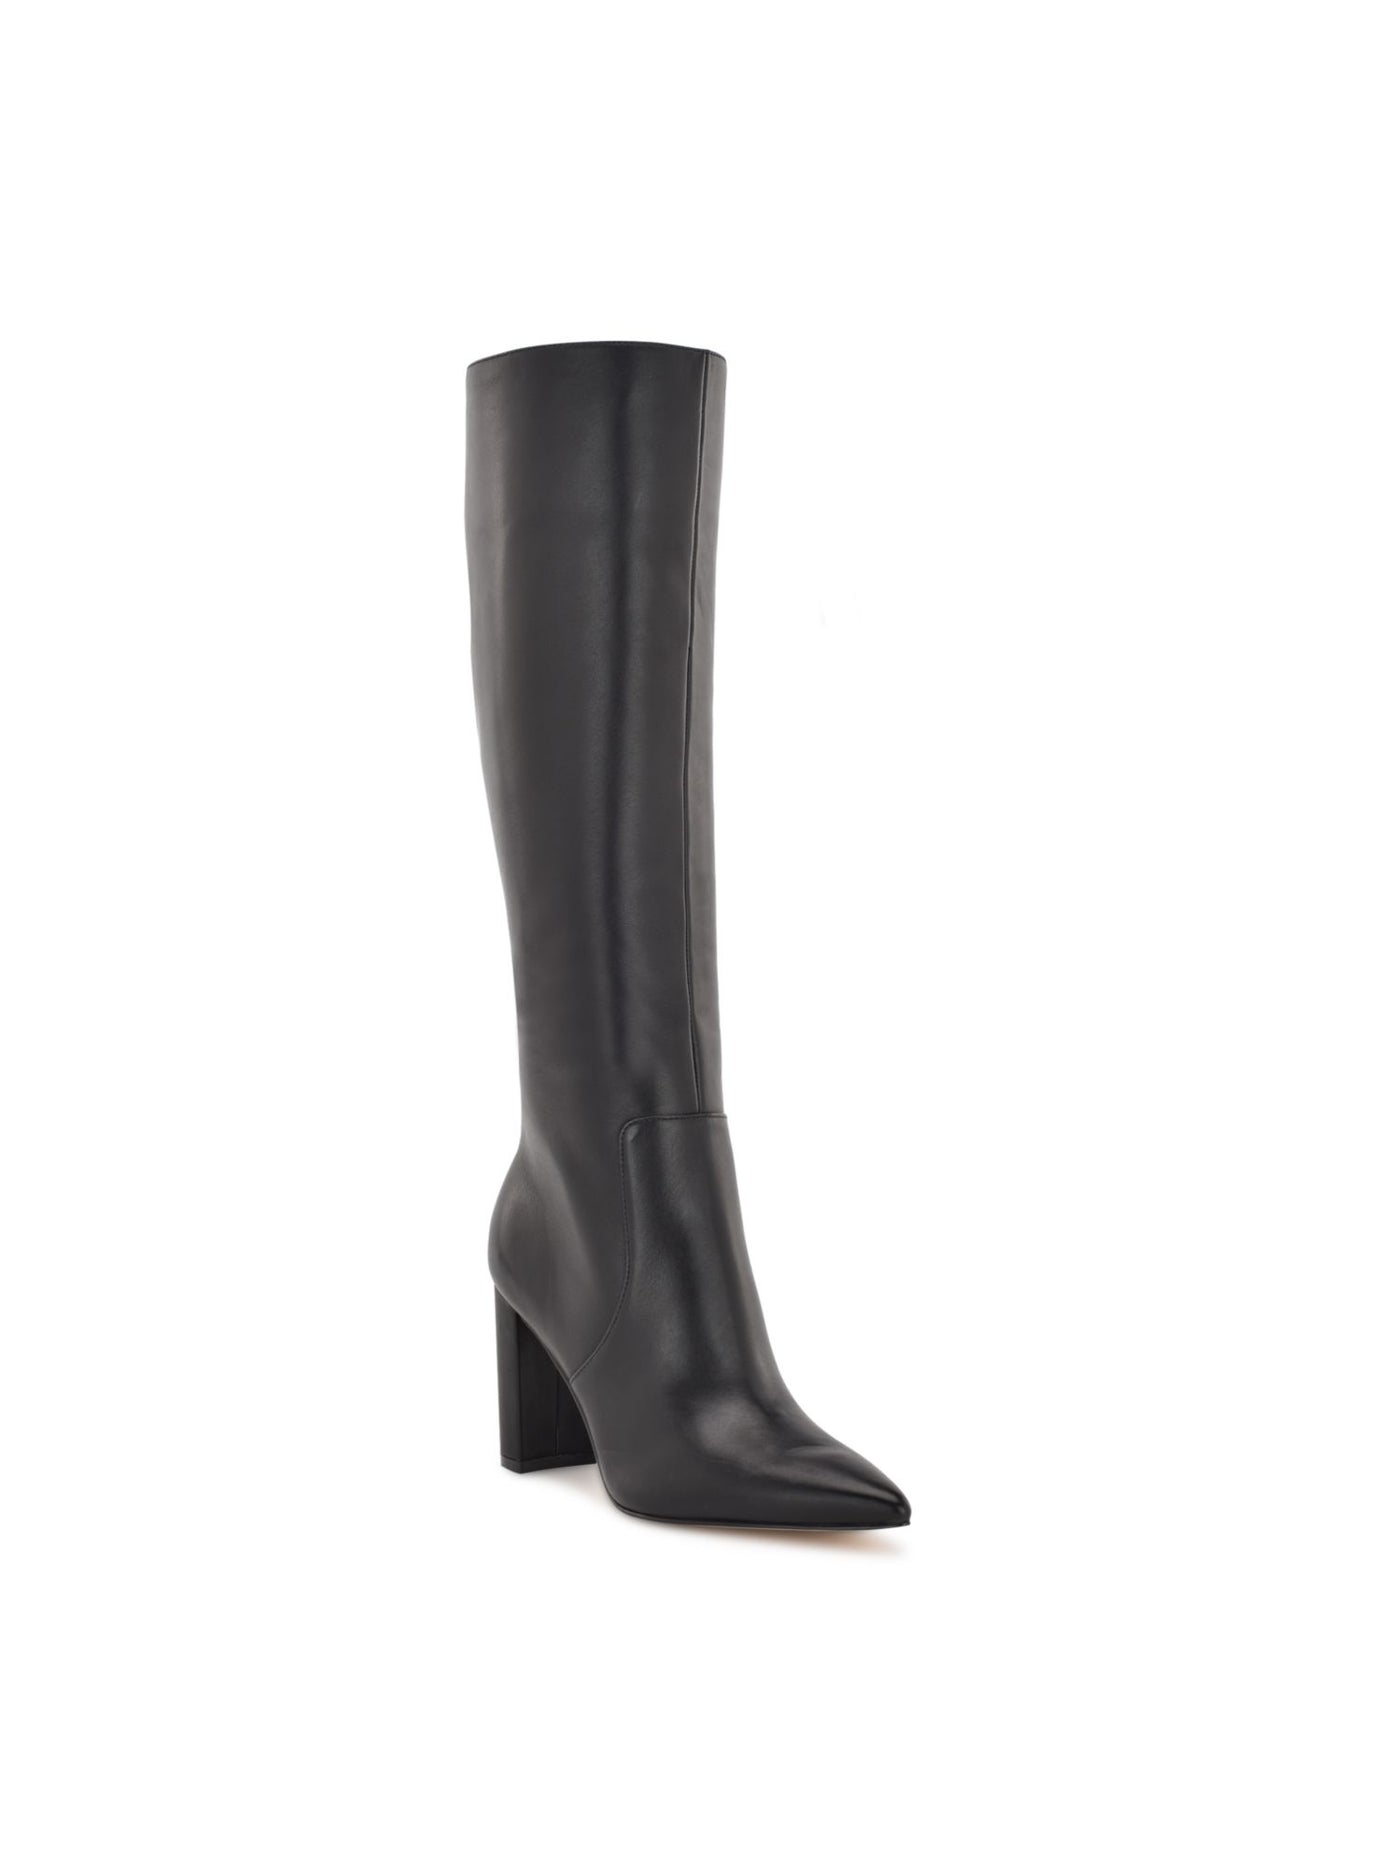 NINE WEST Womens Black Goring Padded Danee Pointed Toe Block Heel Zip-Up Leather Dress Boots 6 M